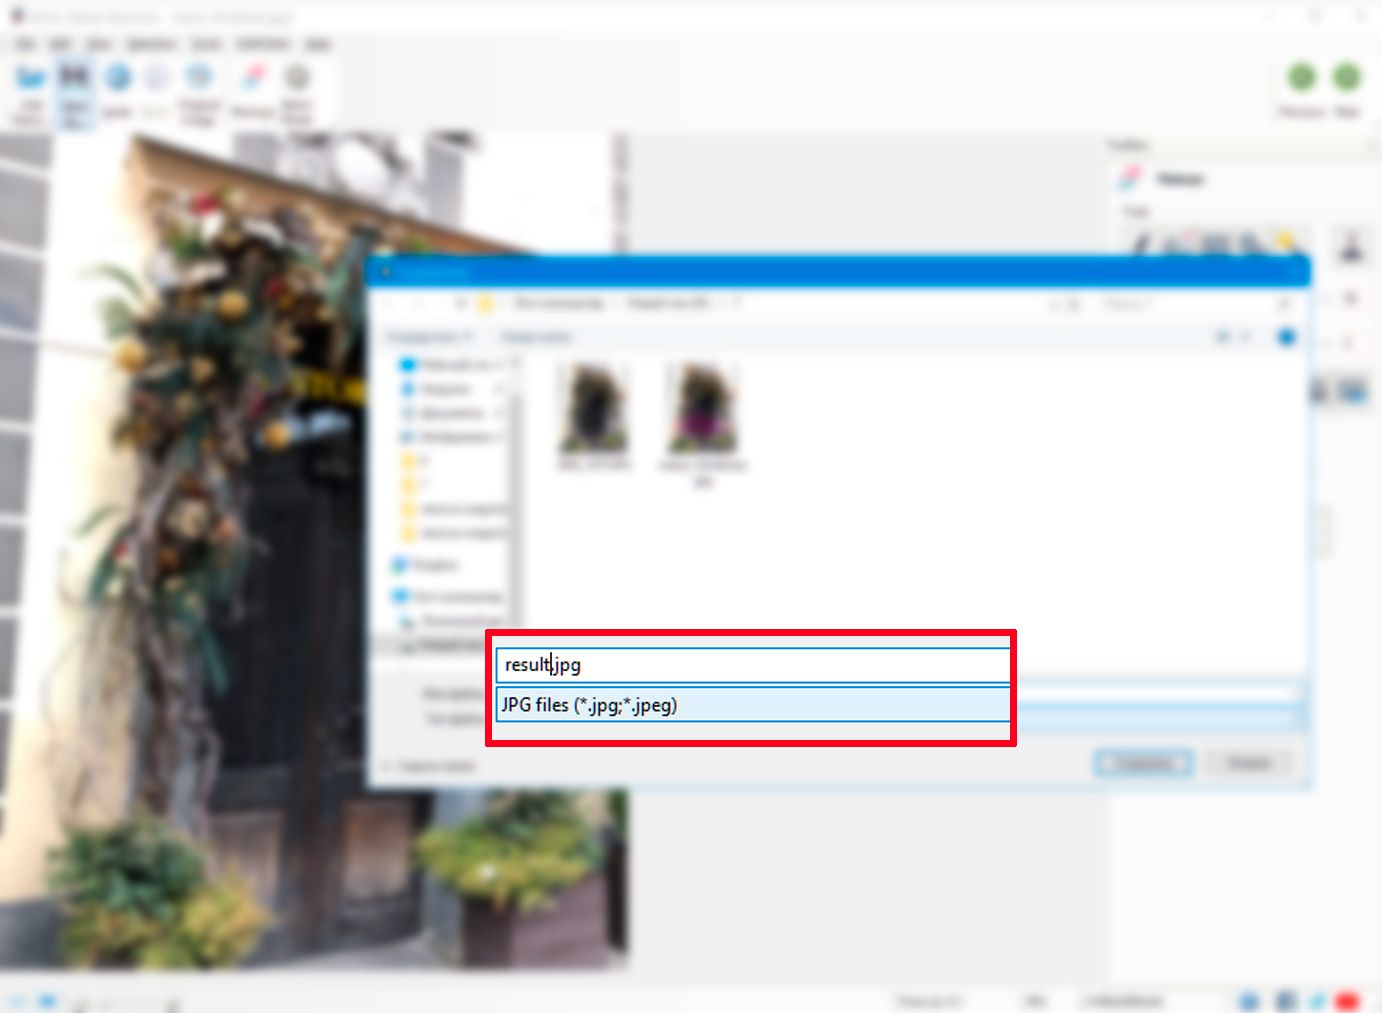 Photo Stamp Removerプログラムで結果を保存するための保存先フォルダーを選択する..